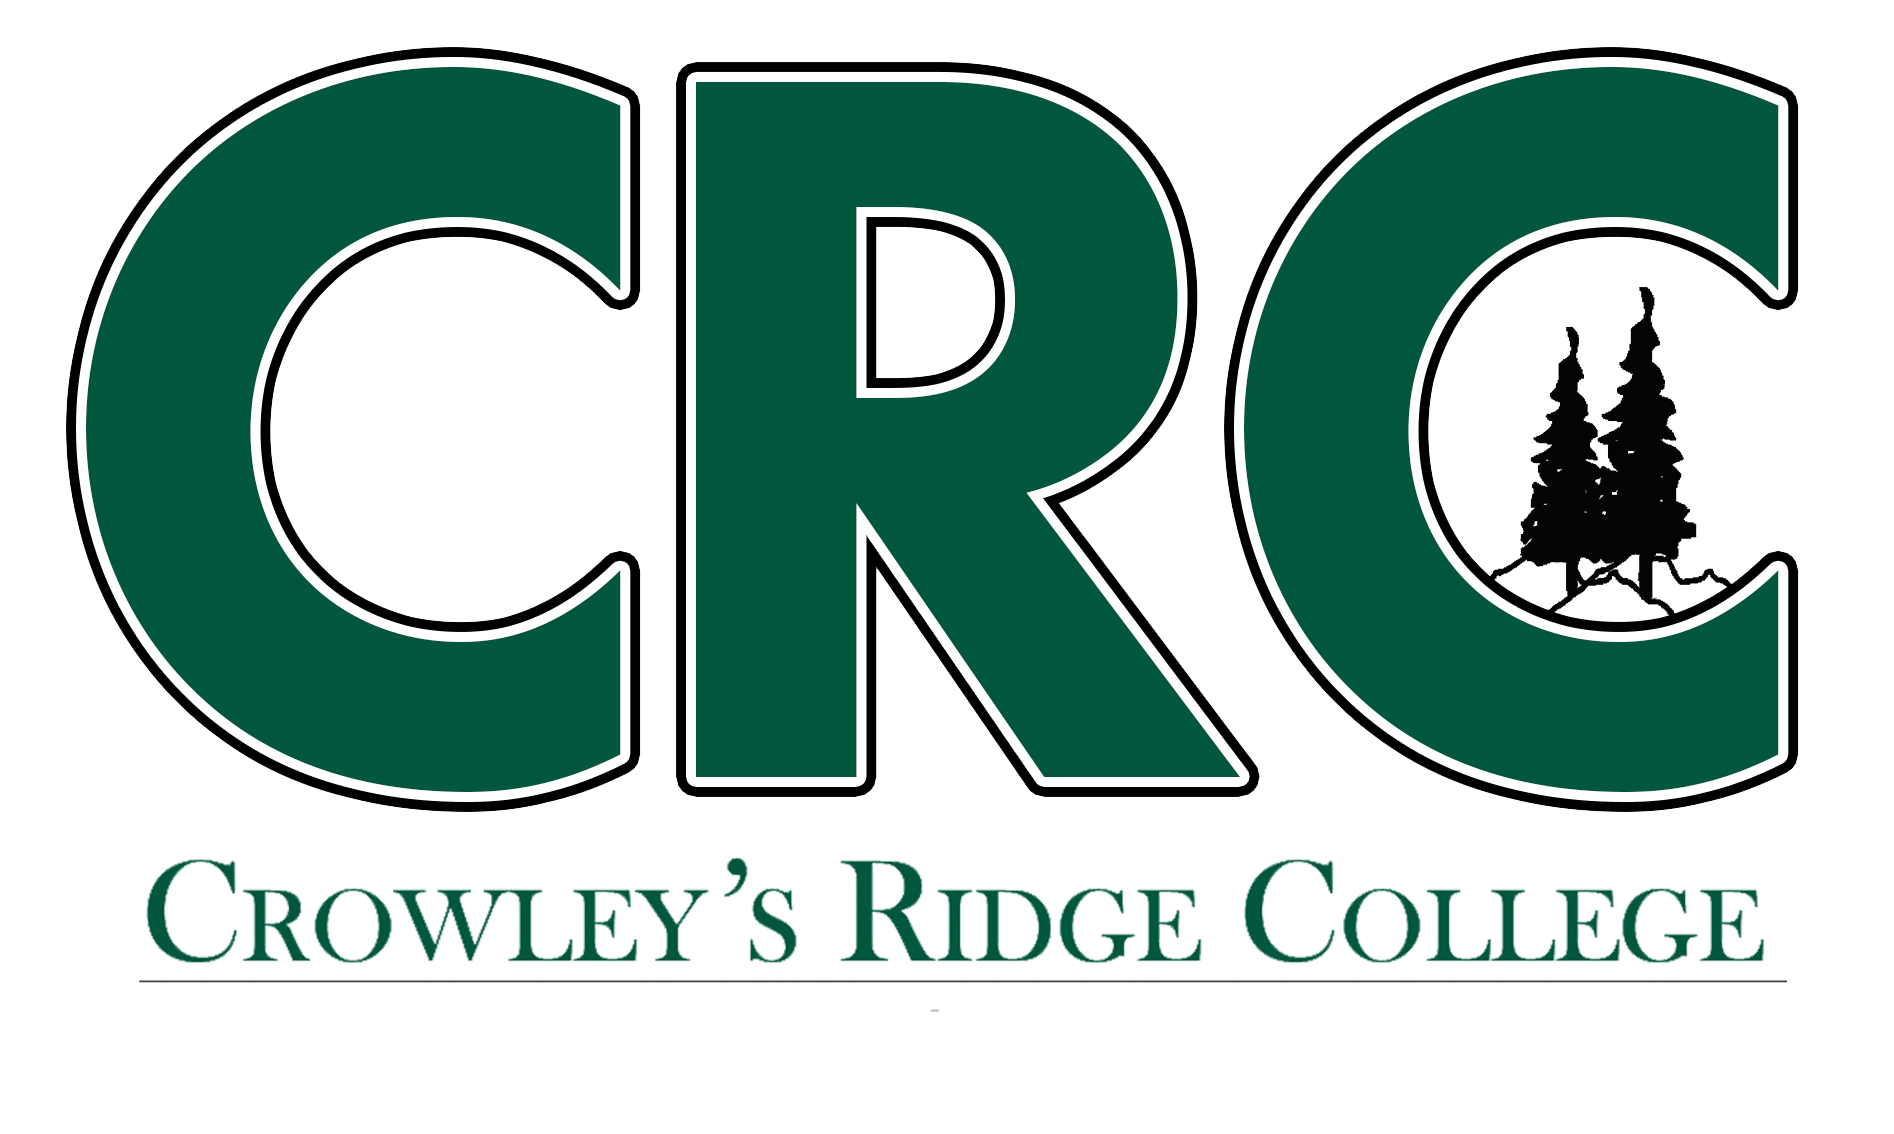 Crowley's Ridge College